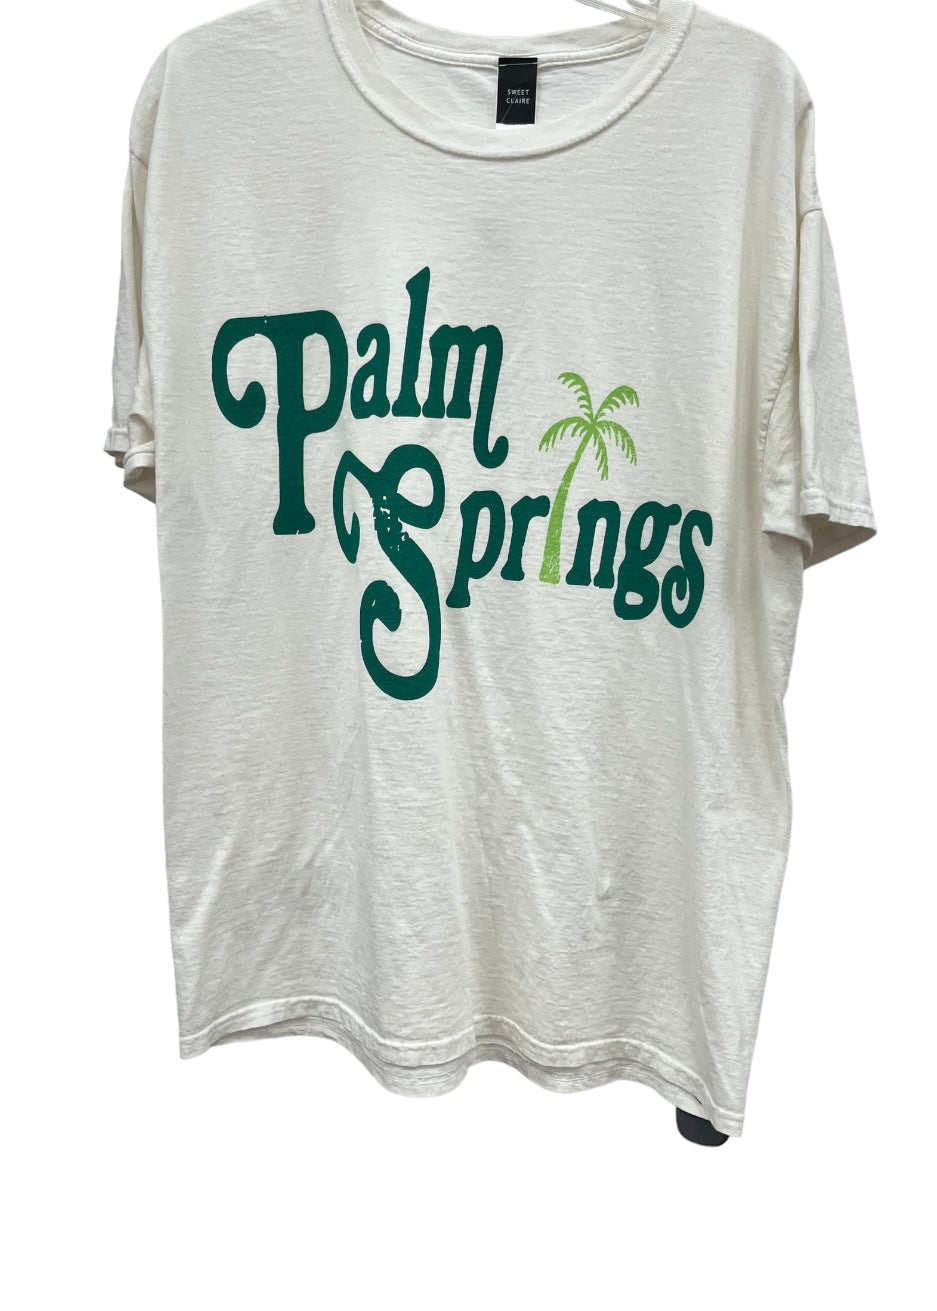 Palm Springs shirt